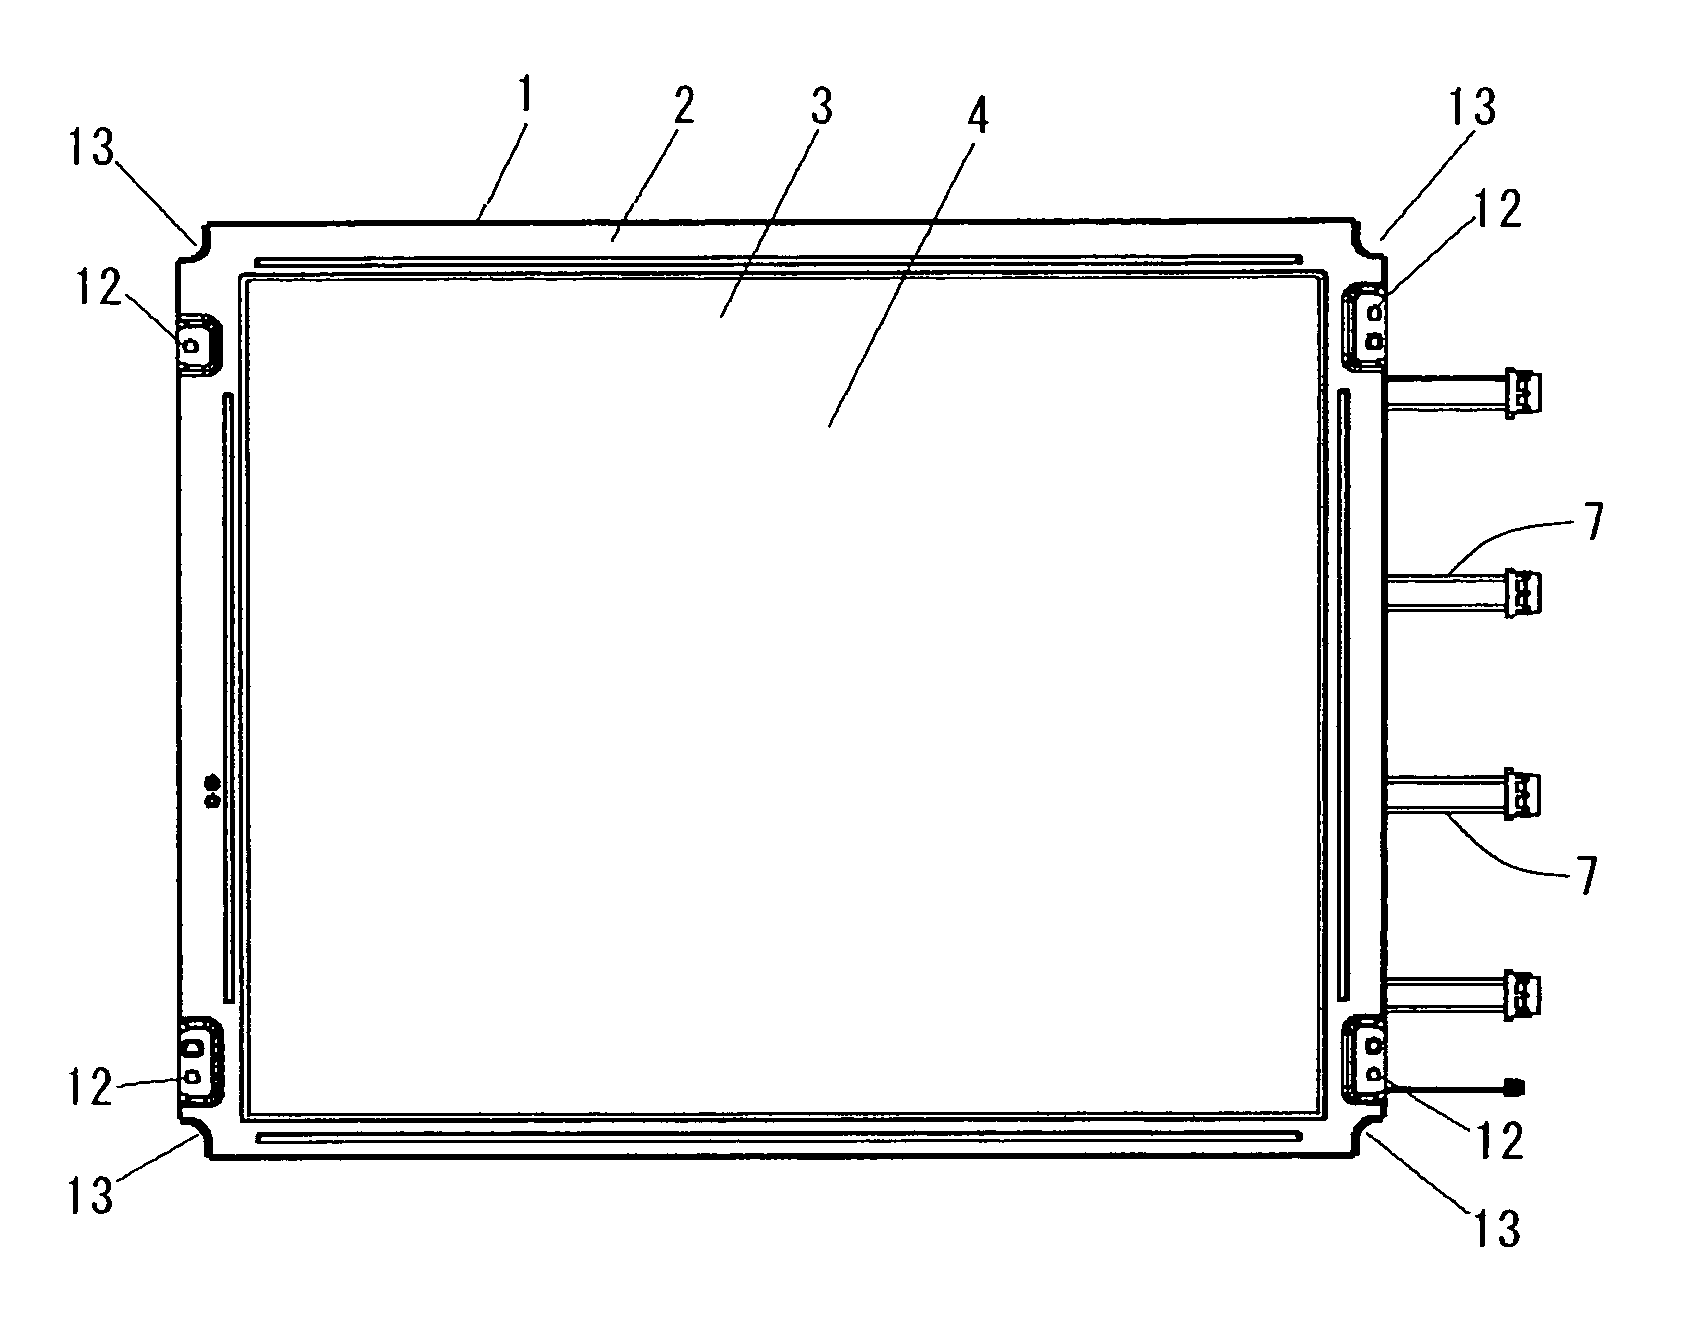 Display module and display unit